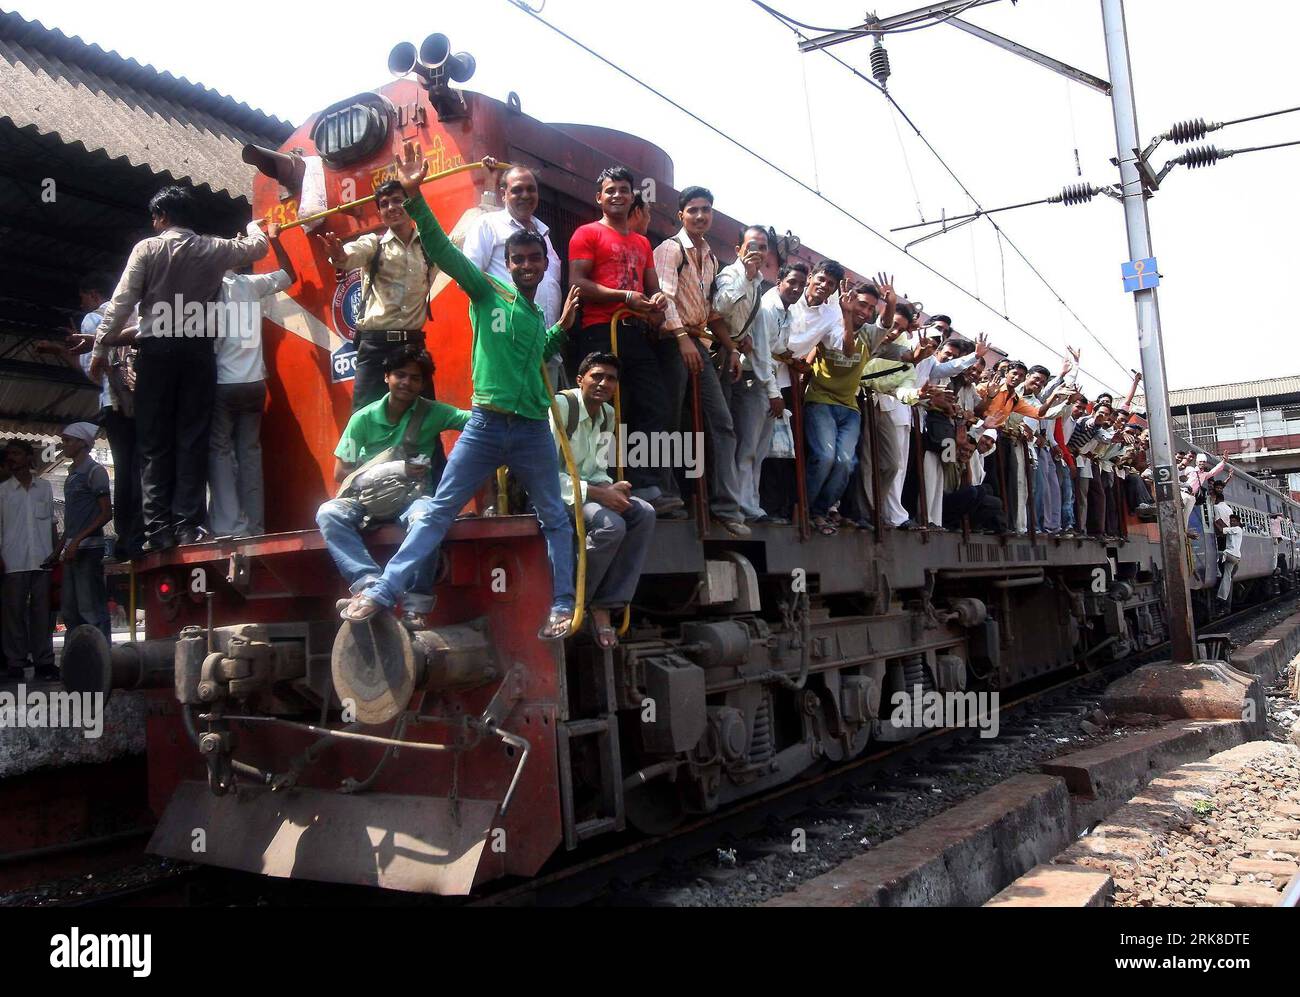 Bildnummer: 54022756  Datum: 04.05.2010  Copyright: imago/Xinhua (100504) -- MUMBAI, MAY 4th 2010 (Xinhua) -- ride on a special train following the strike of train drivers in Mumbai, India, May 4, 2010. Train drivers in Mumbai went for a strike on Tuesday, leaving thousands of passengers stuck in the city. (Xinhua/Stringer)(zl) (2)INDIA-MUMBAI-TRAIN DRIVERS-STRIKE PUBLICATIONxNOTxINxCHN Politik Wirtschaft Bahn Verkehr Bahnstreik Lokführer Lokführerstreik kbdig xng 2010 quer premiumd xint o0 kurios o00 voll, überfüllt    Bildnummer 54022756 Date 04 05 2010 Copyright Imago XINHUA  Mumbai May 4th Stock Photo